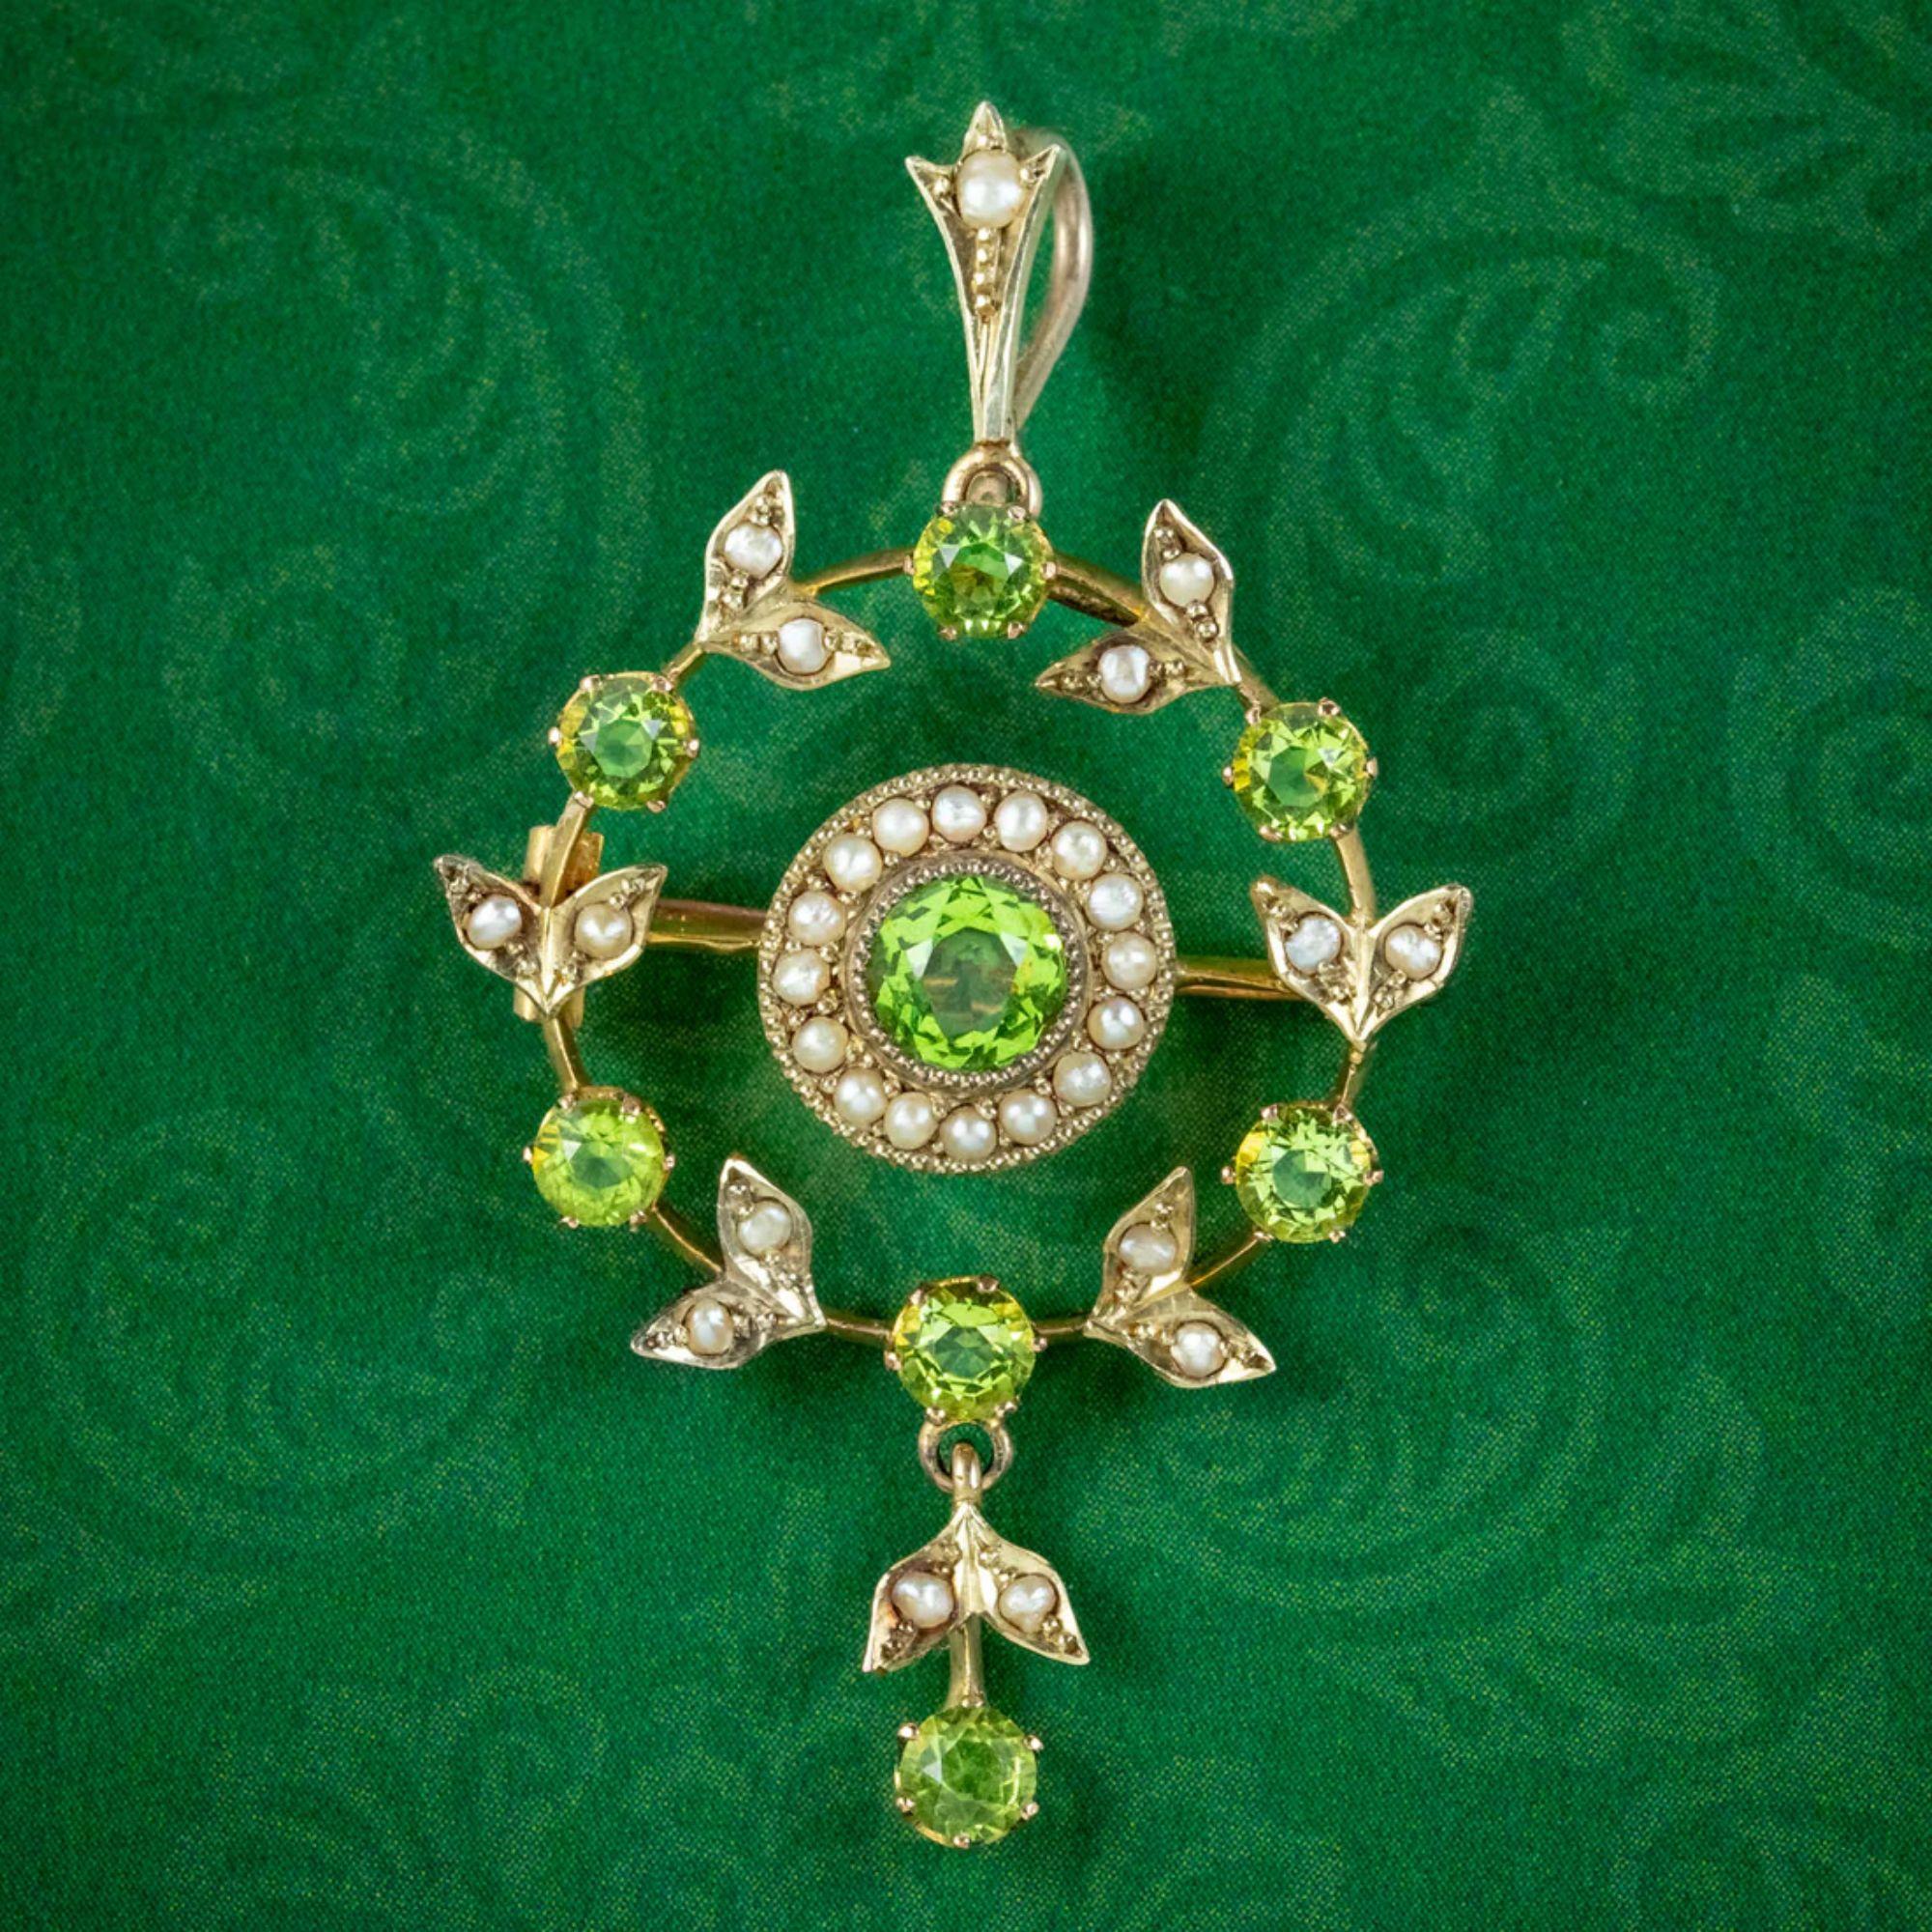 Antique Edwardian Peridot Pearl Pendant 9ct Gold, circa 1901-1915 For Sale 1